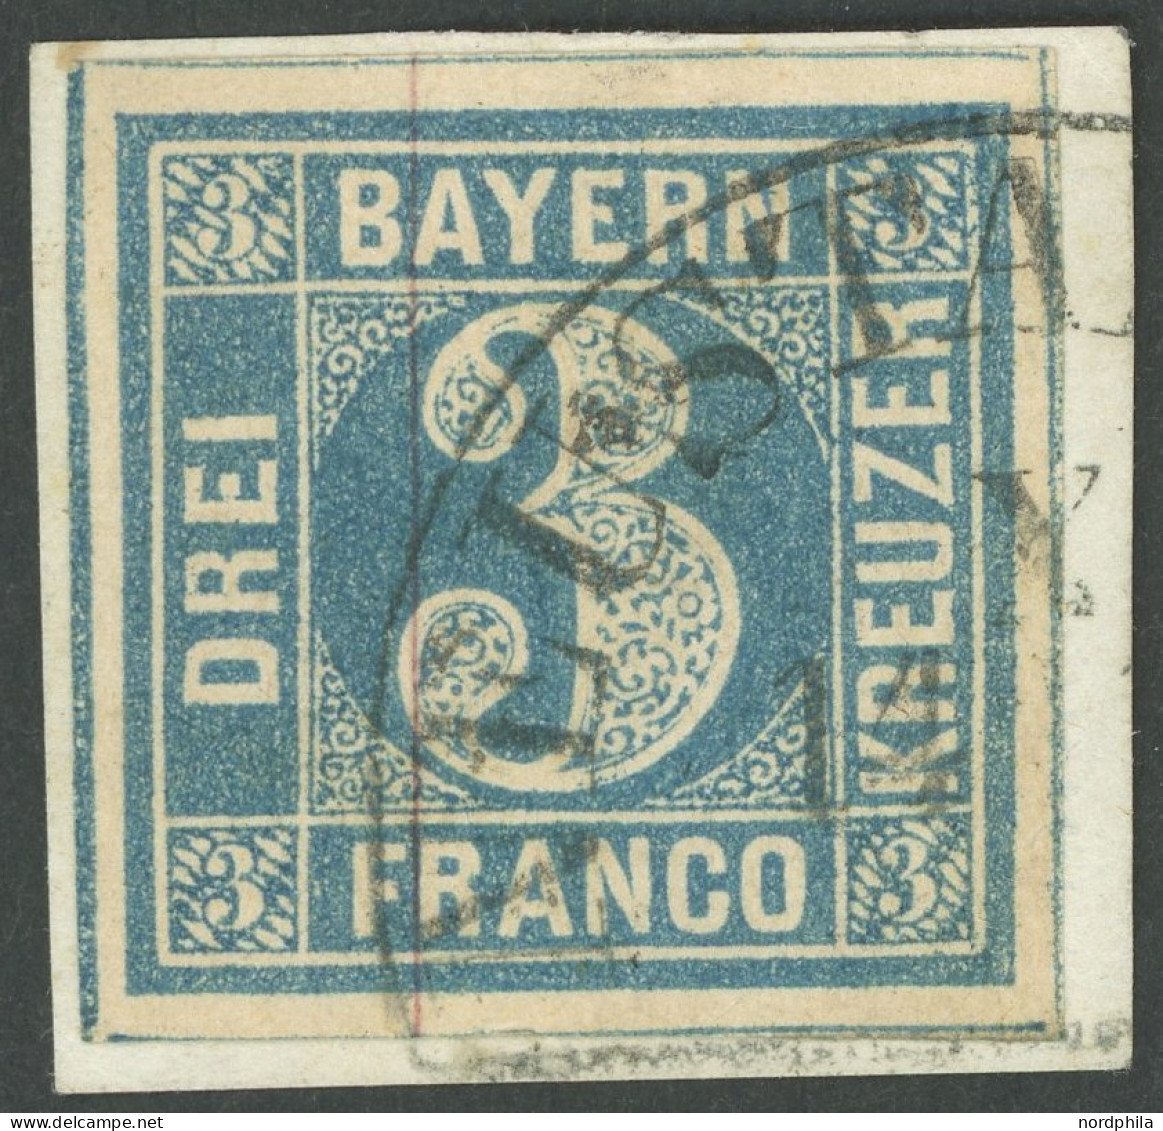 BAYERN 2Ia BrfStk, 1849, 3 Kr. Blau, Type I, Segmentstempel NEUSTADT, Breitrandig, Kabinettstück, Signiert - Used